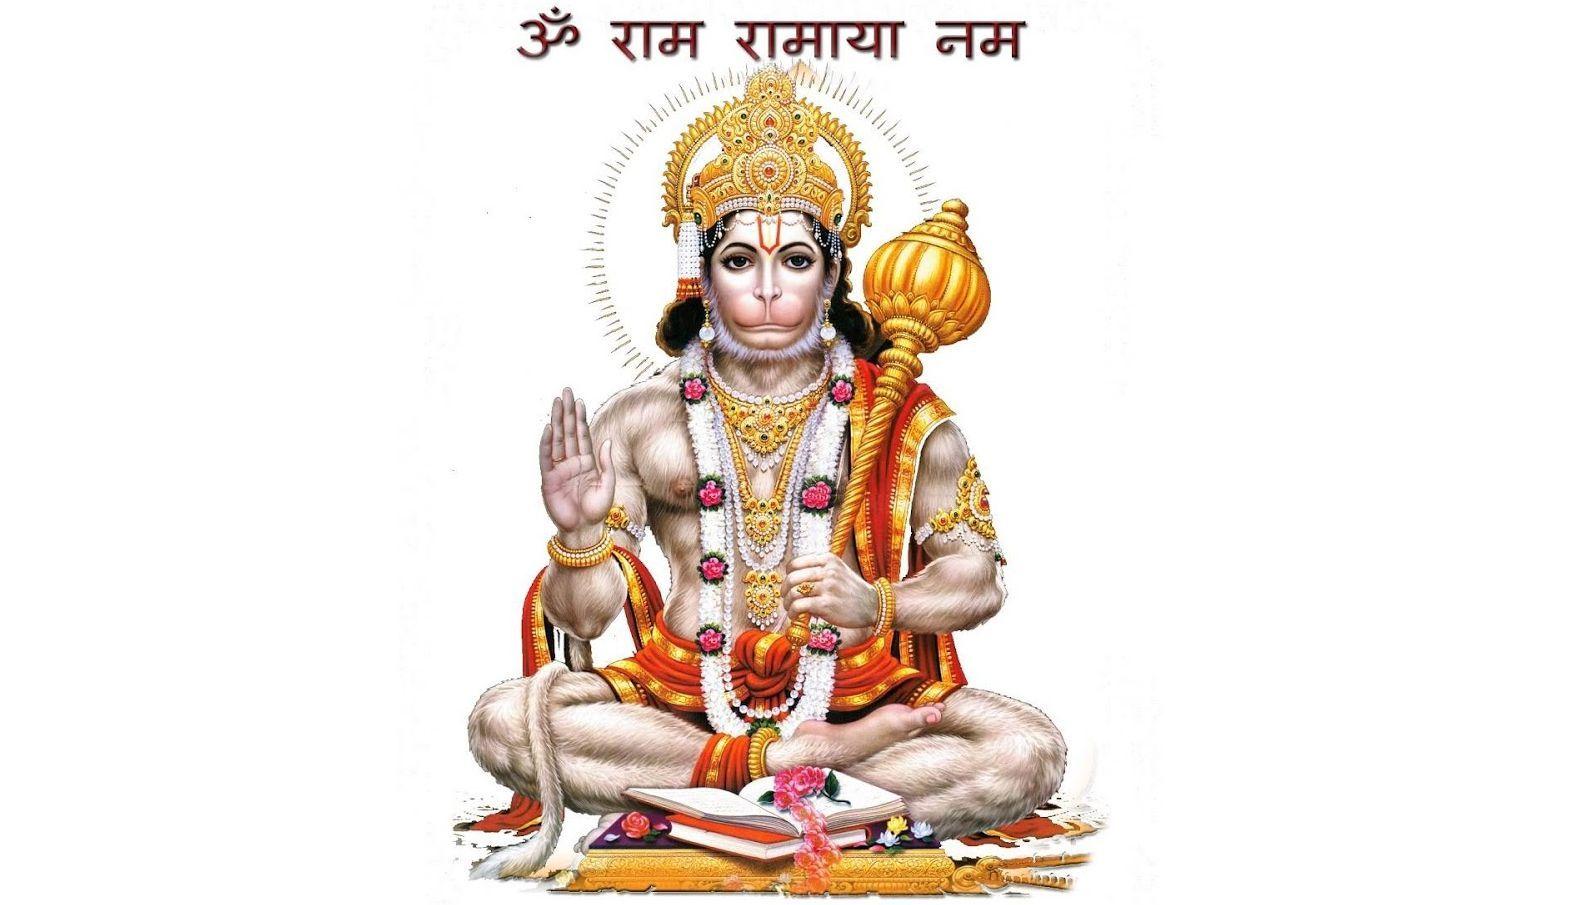 Download Free HD Wallpaper of Shree Hanuman